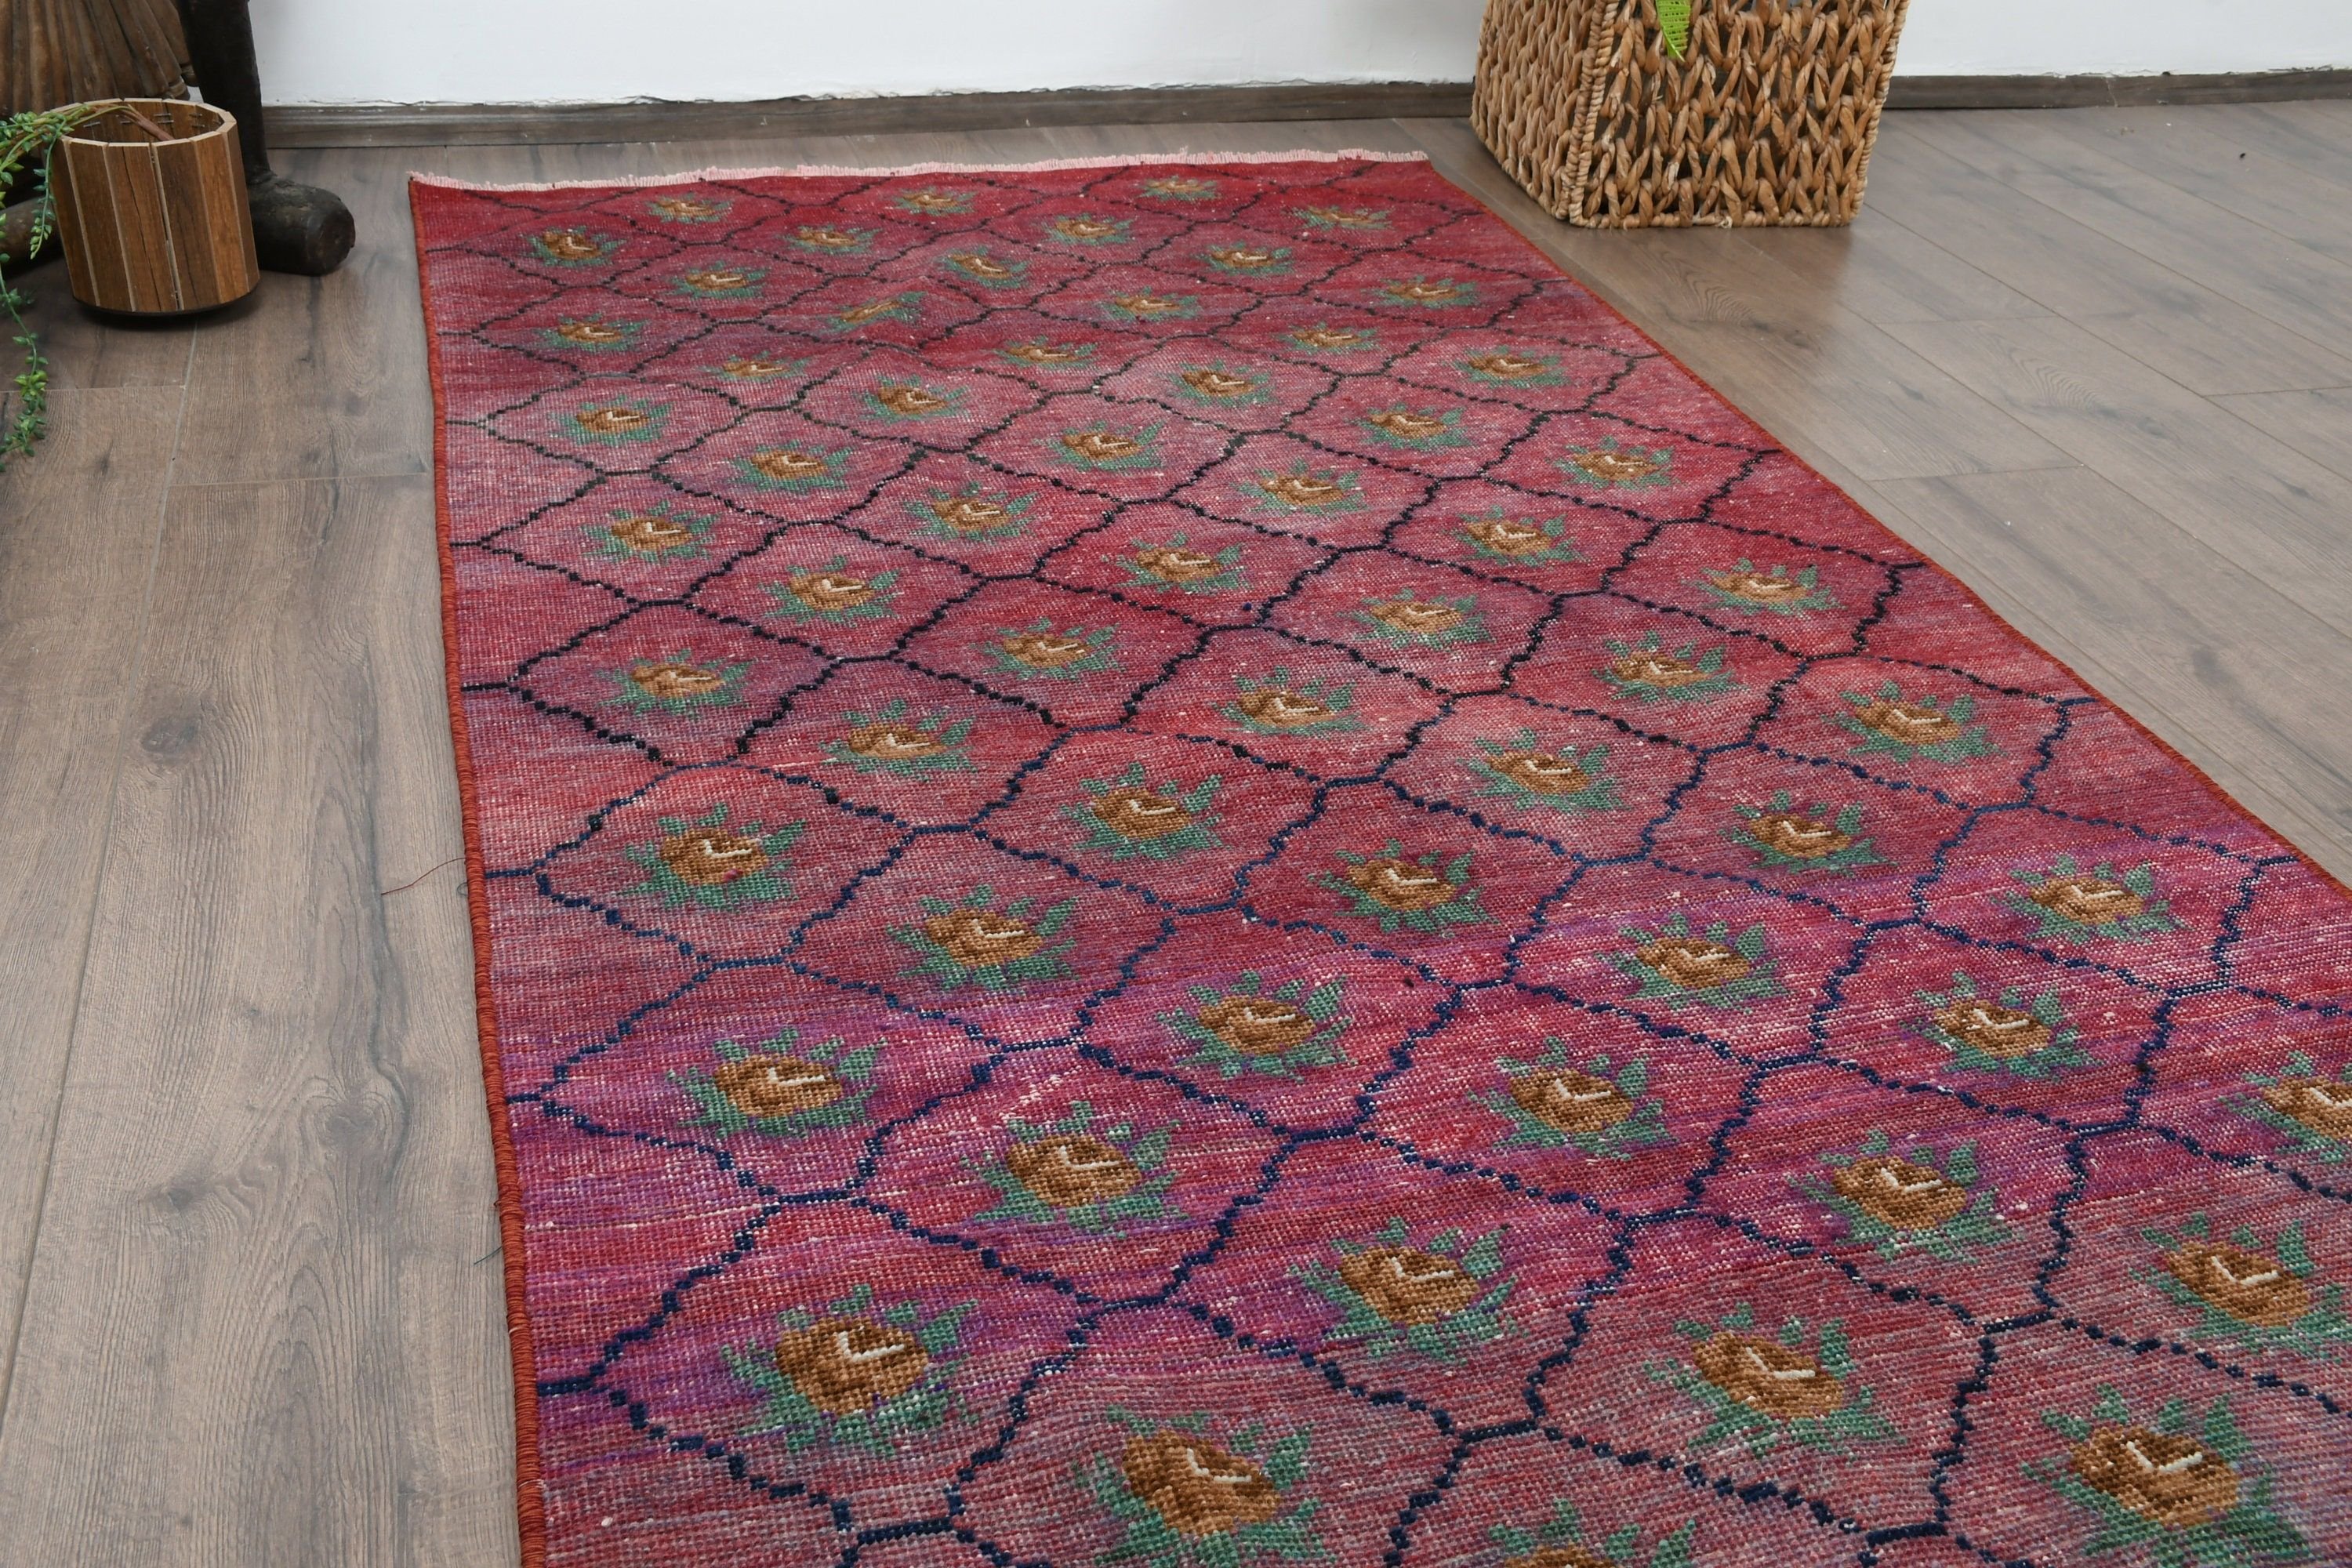 Floor Rug, Home Decor Rugs, Kitchen Rug, Vintage Rug, Outdoor Rug, Nursery Rug, Turkish Rug, 3.1x6.6 ft Accent Rugs, Pink Home Decor Rug